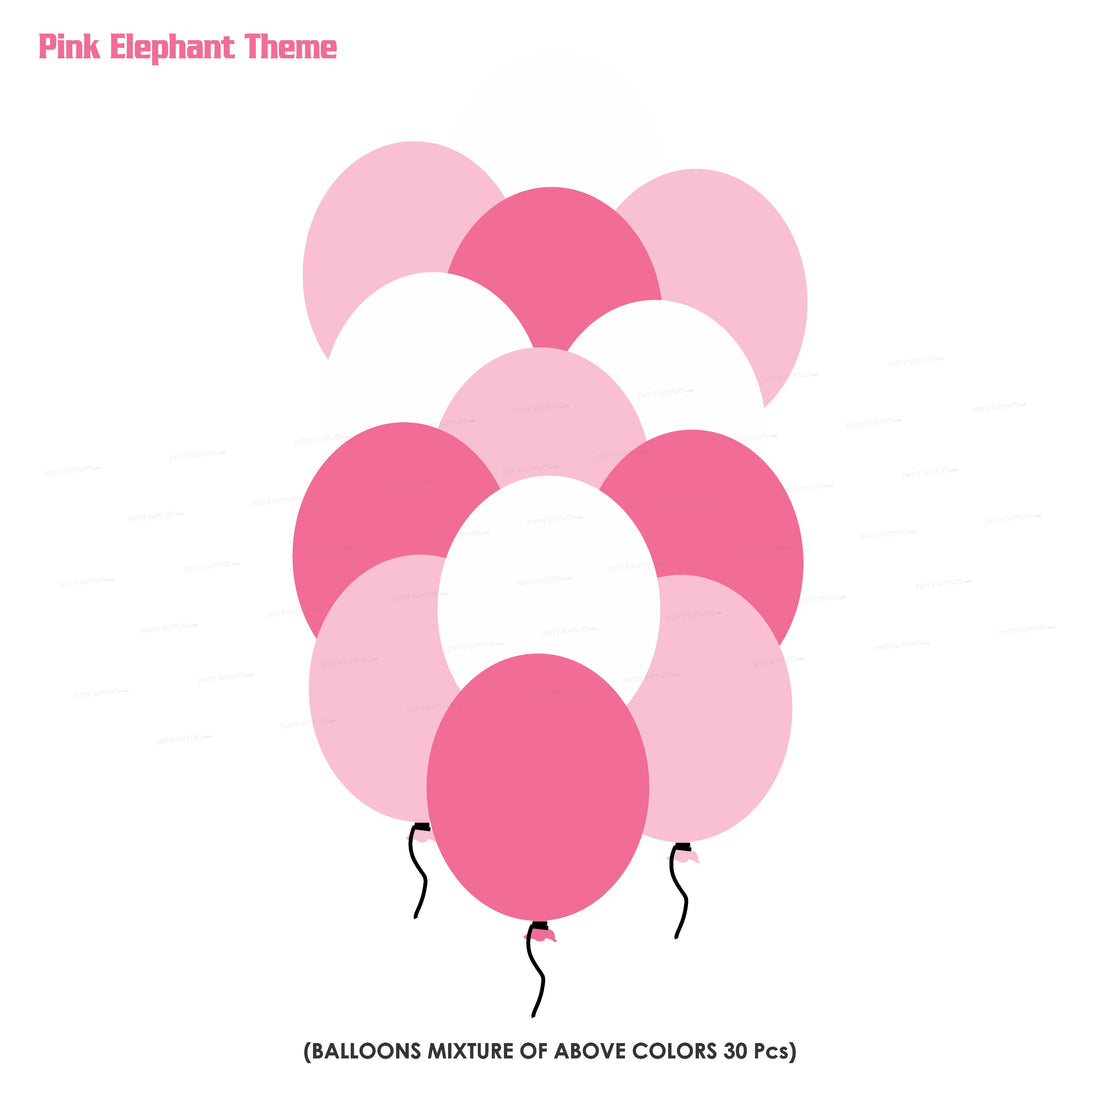 PSI Pink Elephant Theme Colour 30 Pcs Balloons